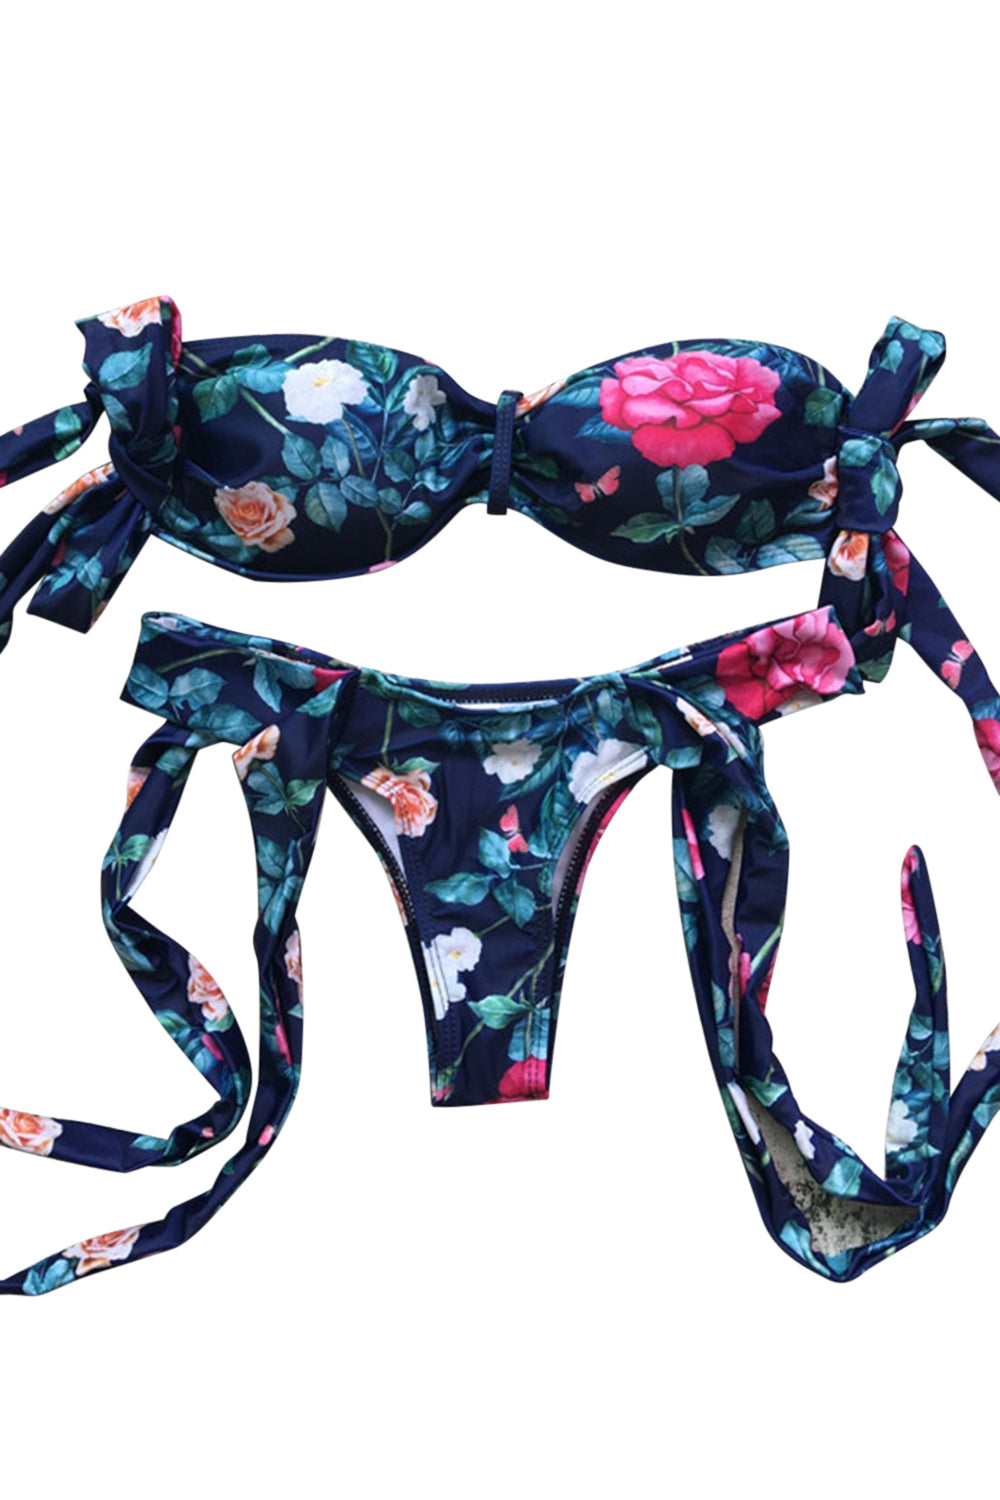 Iyasson Flower Printing Off-shoulder Design Tropical swimsuit